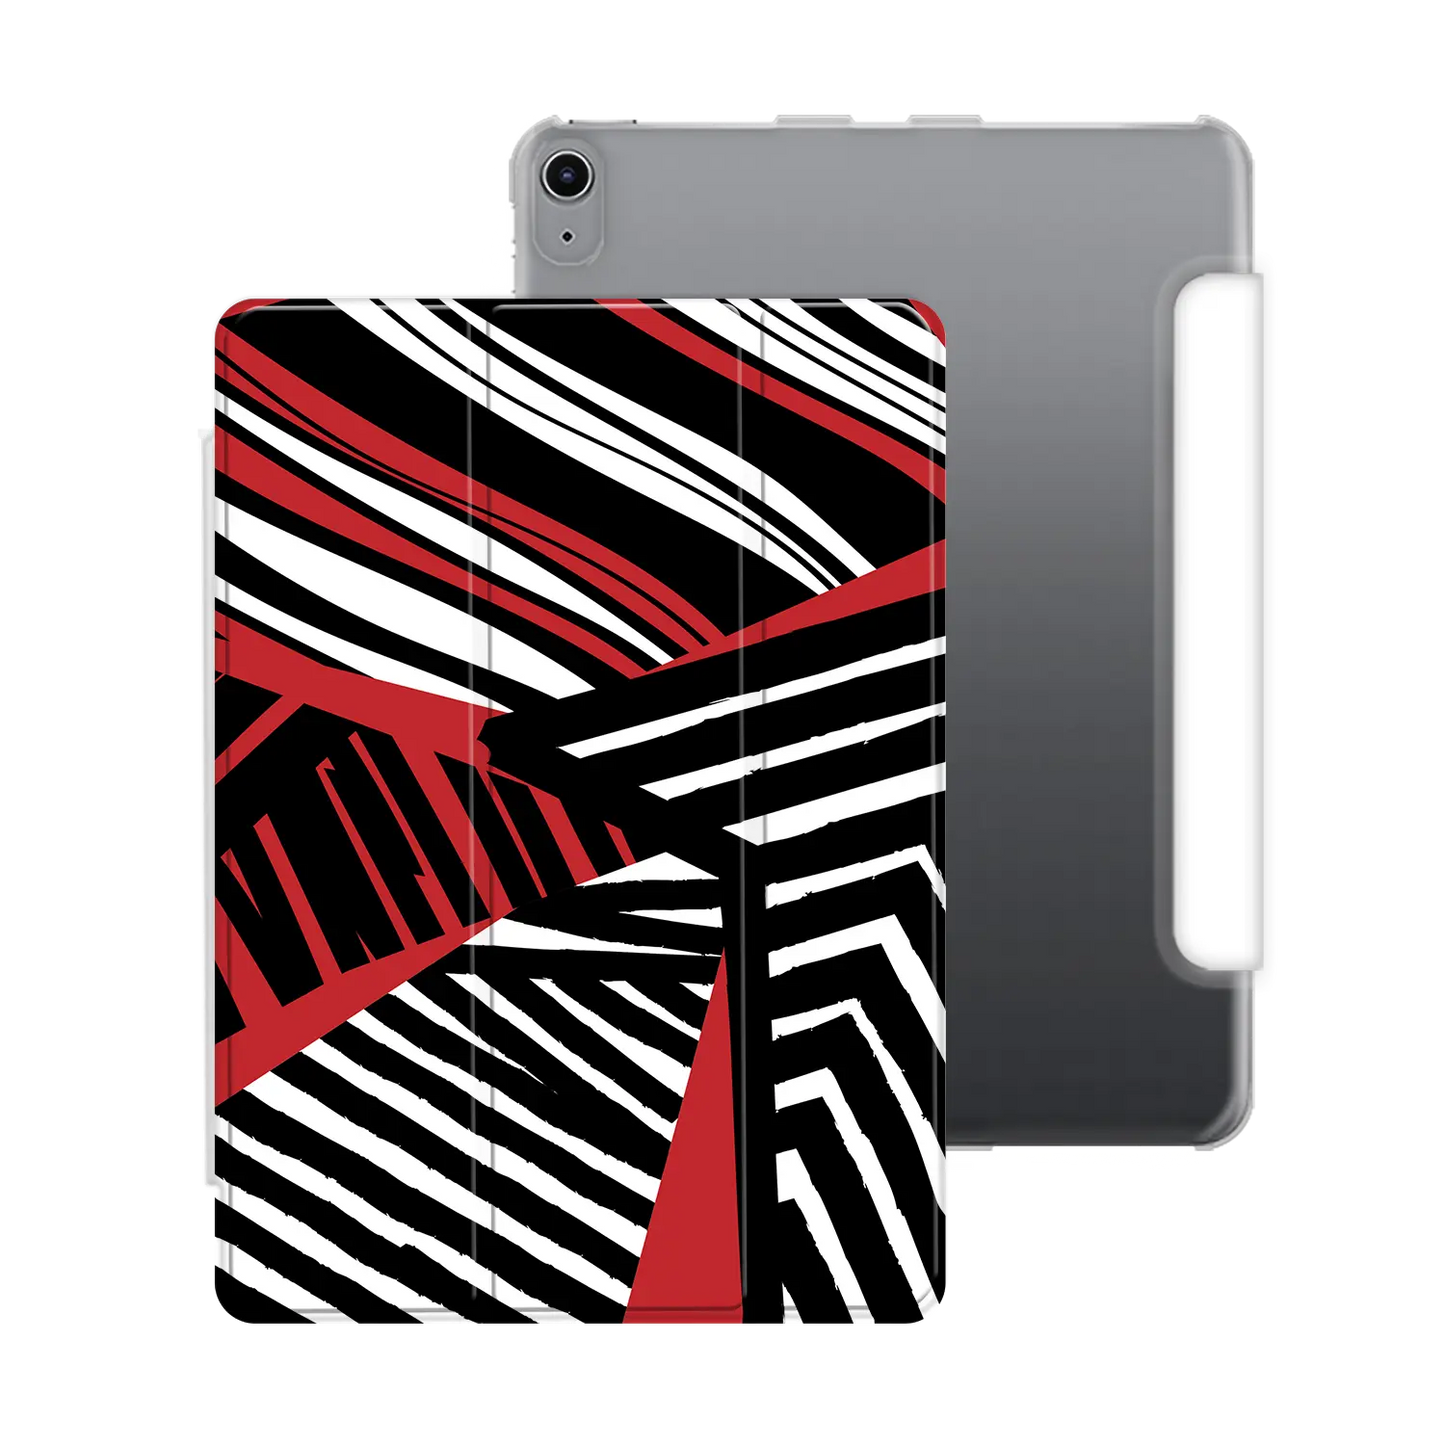 Stripes - Custom iPad Case